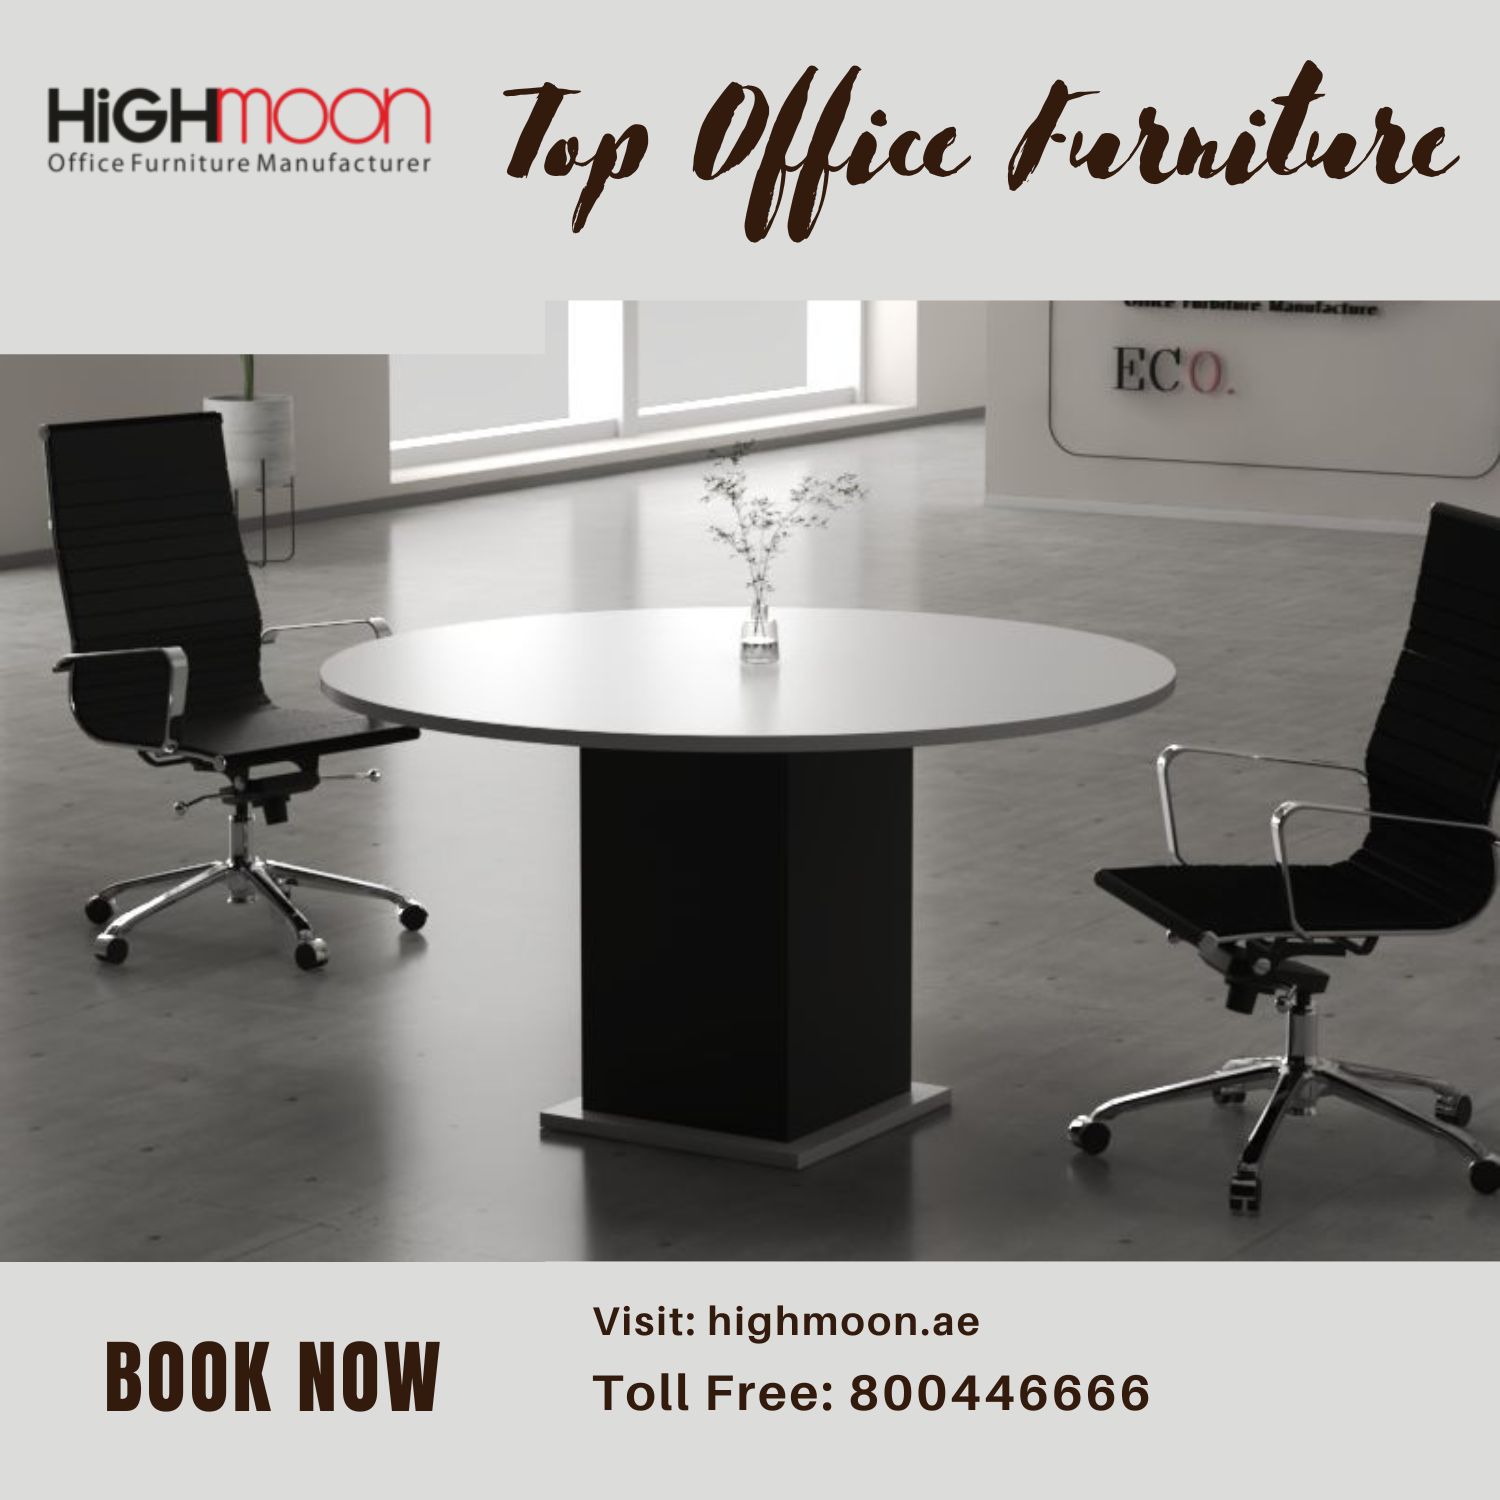 Top Office Furniture Dubai, Highmoon Office Furniture And Manufacture